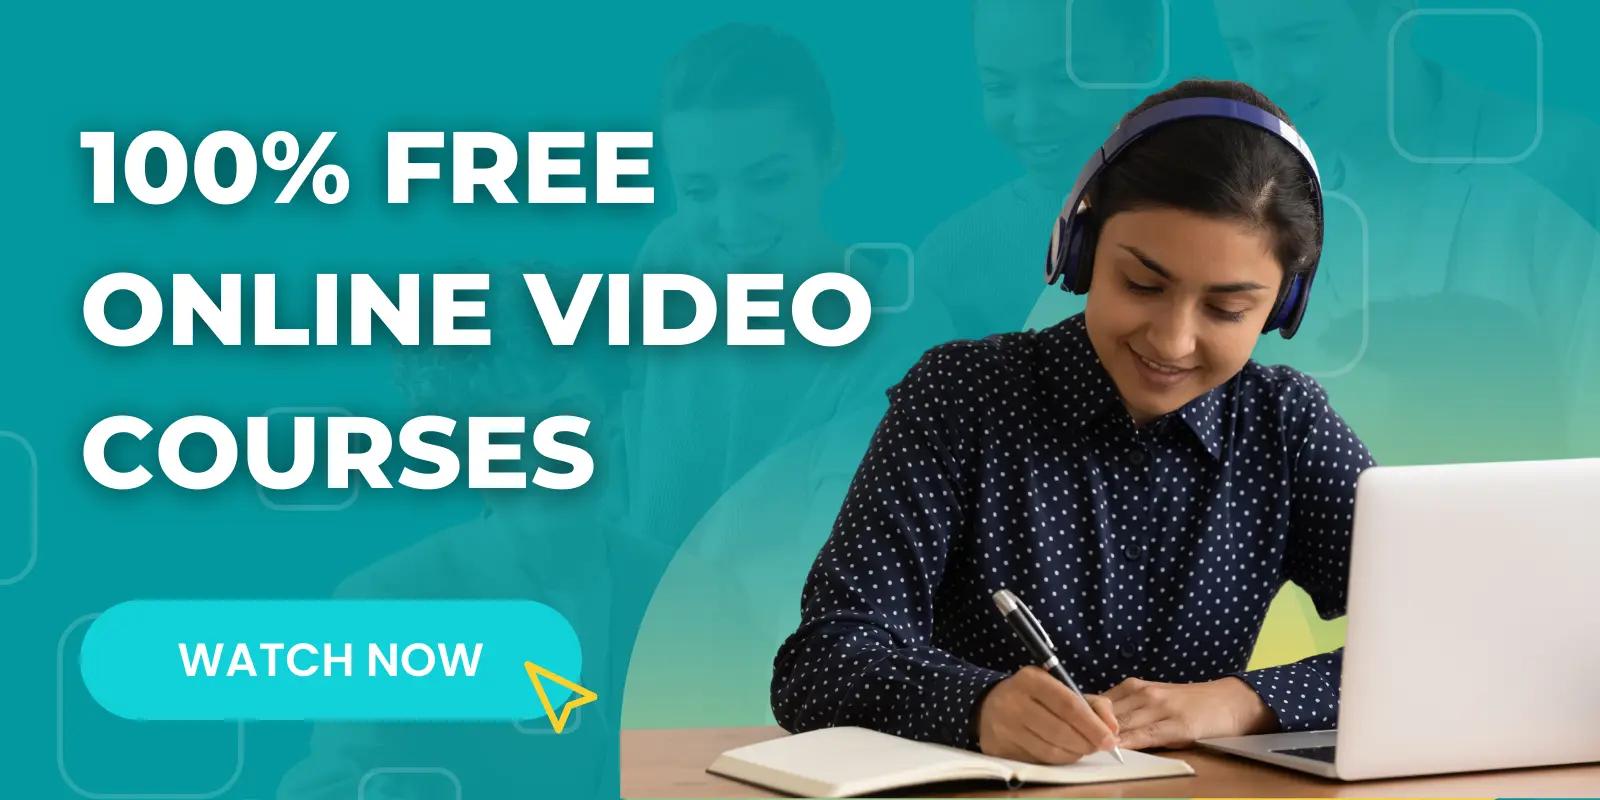 Watch free video classes